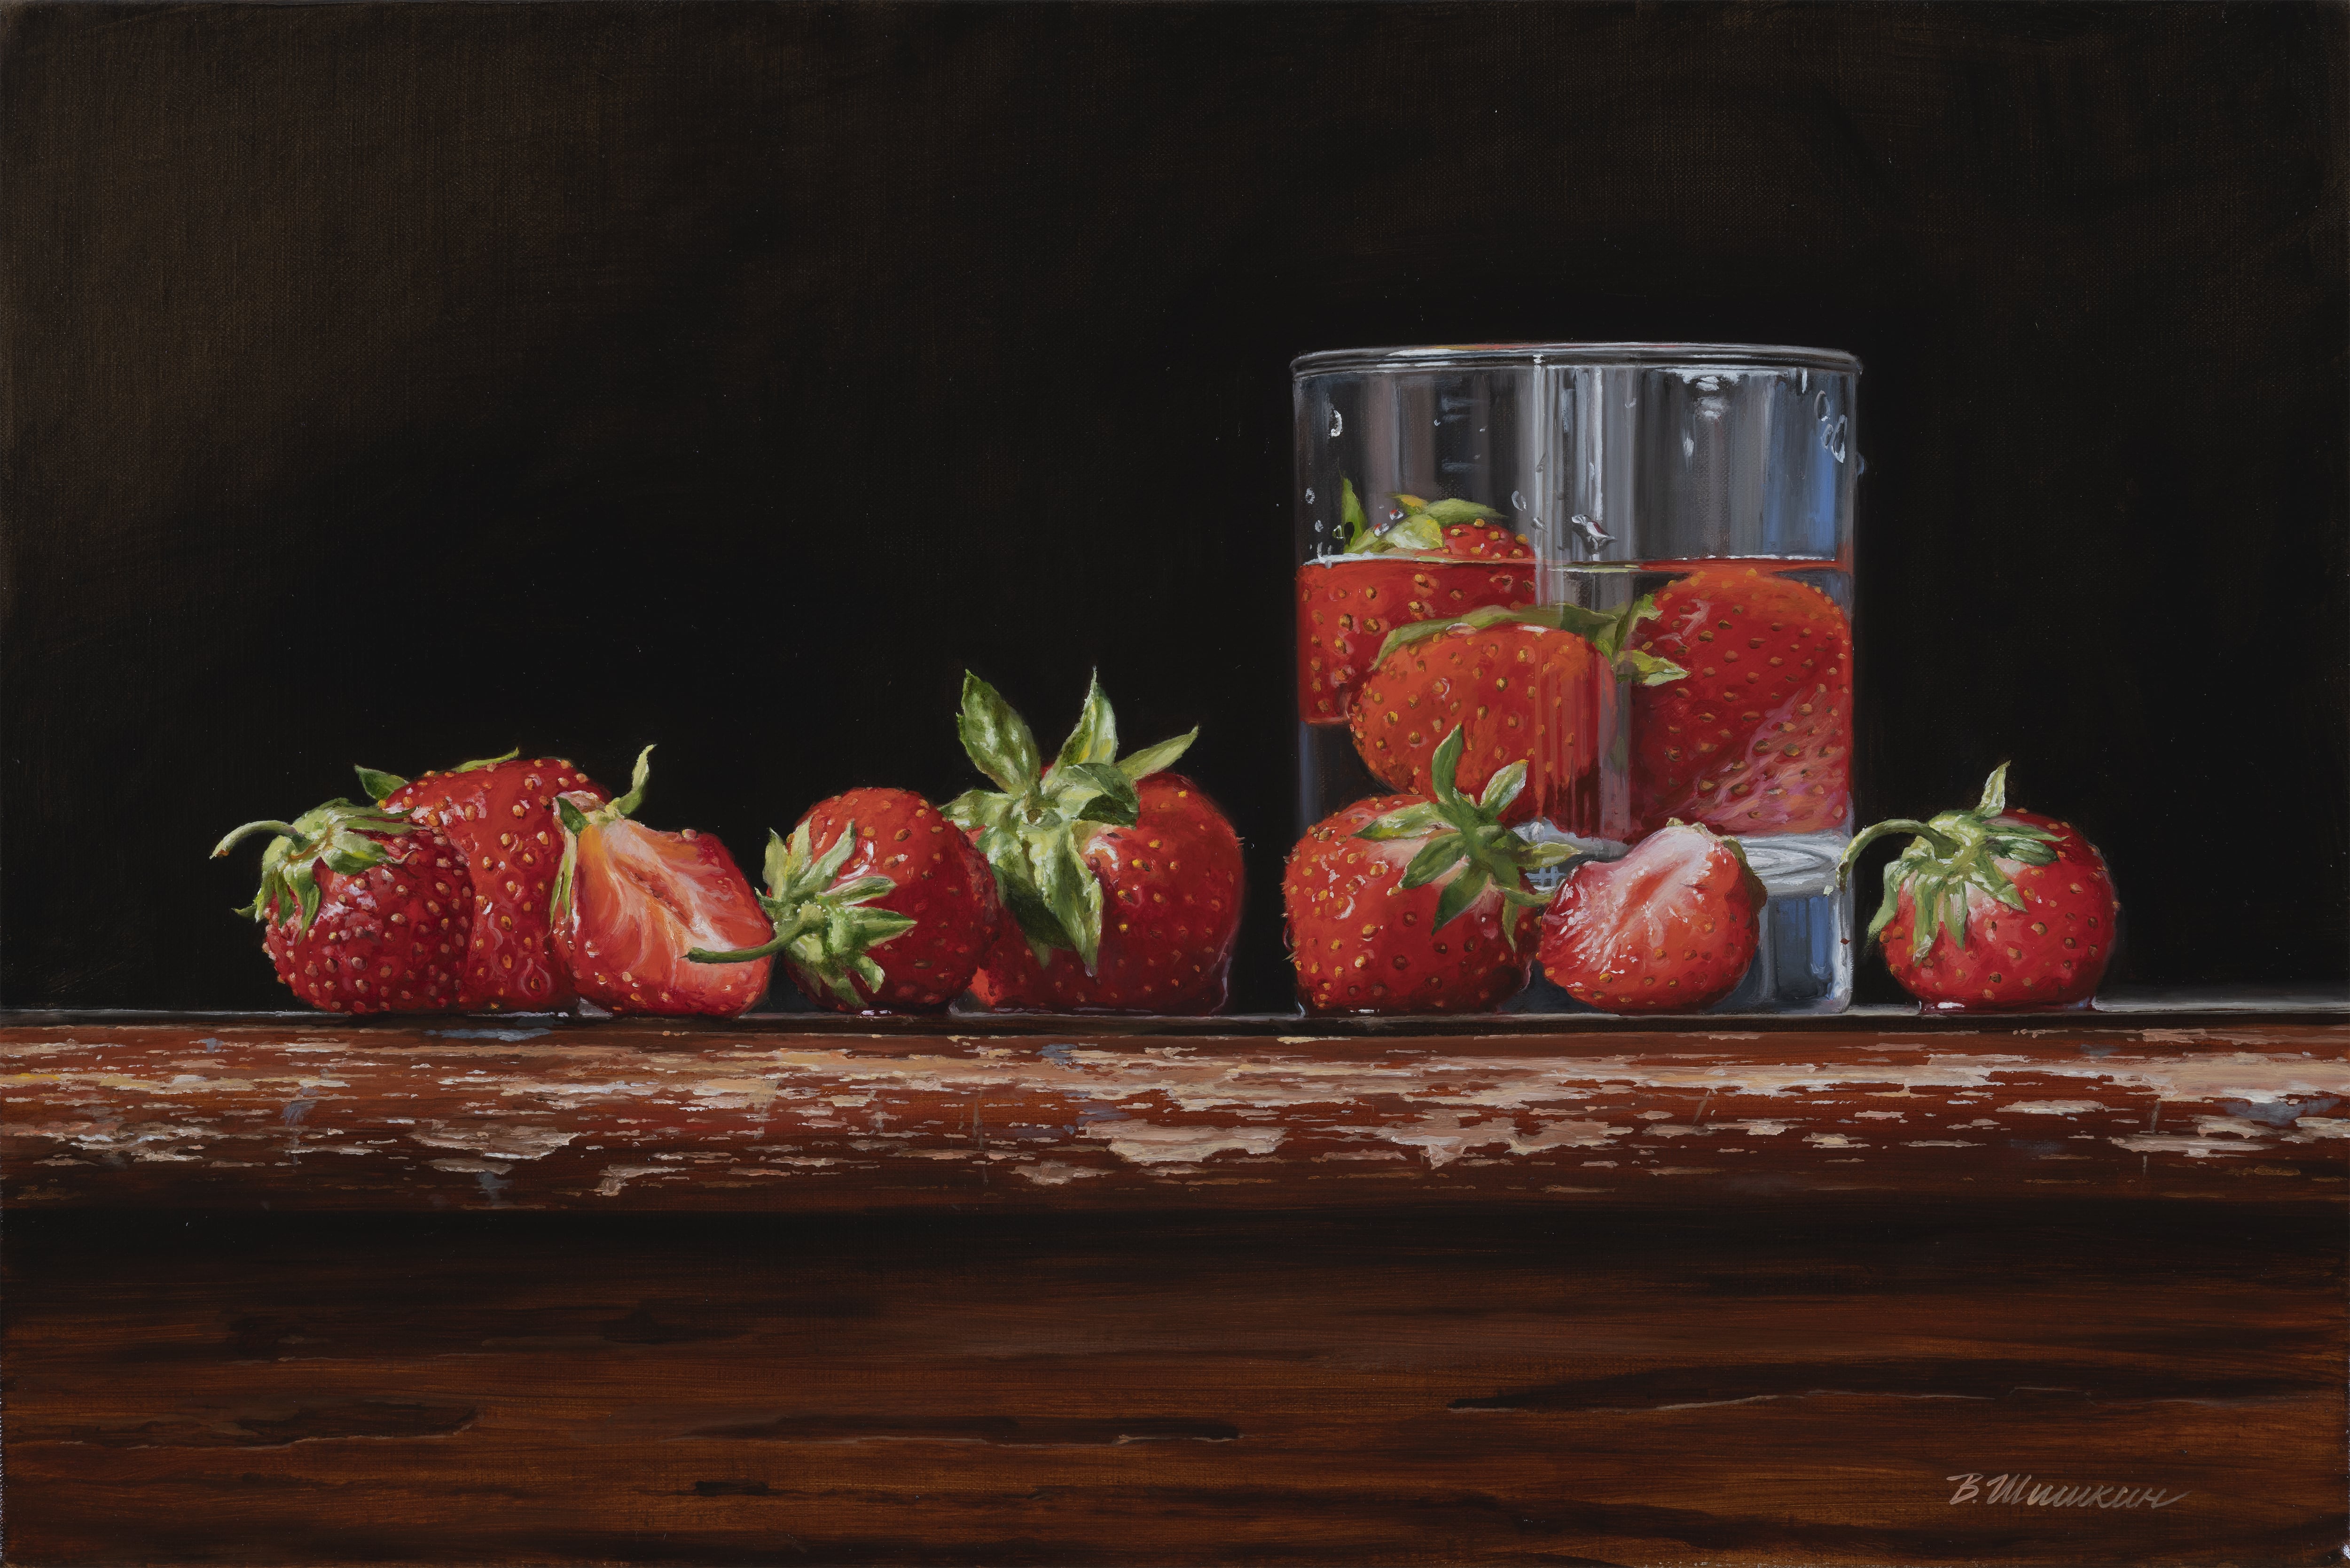 Strawberries in a glass - 1, Valery Shishkin, 买画 油